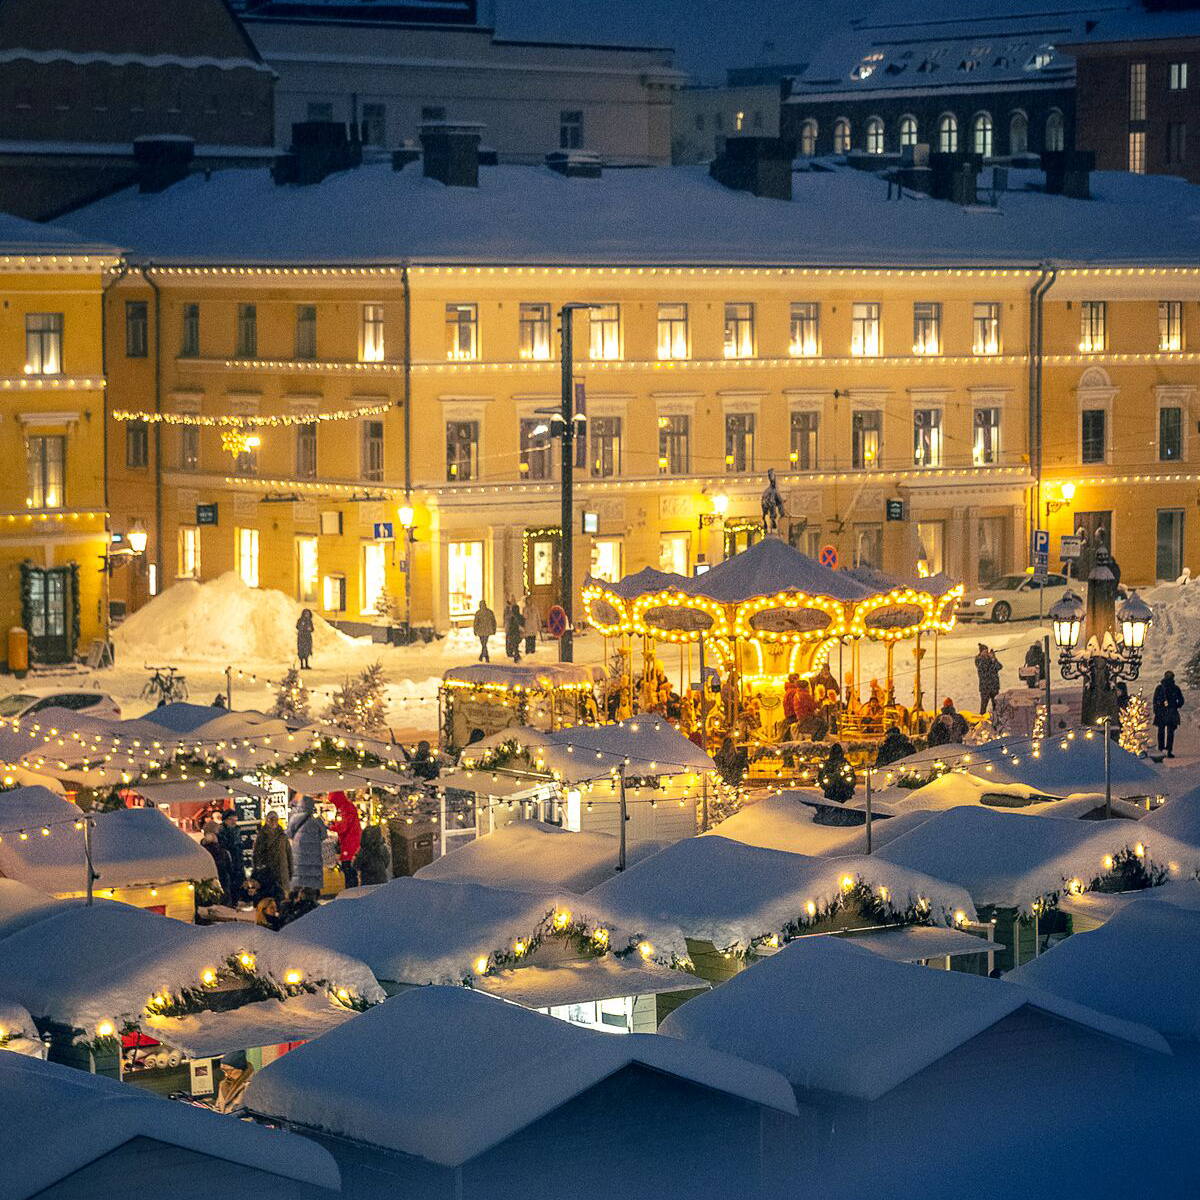 Helsinki Senate Square Christmas Market credit ©AnttiHarkio VisitFinland